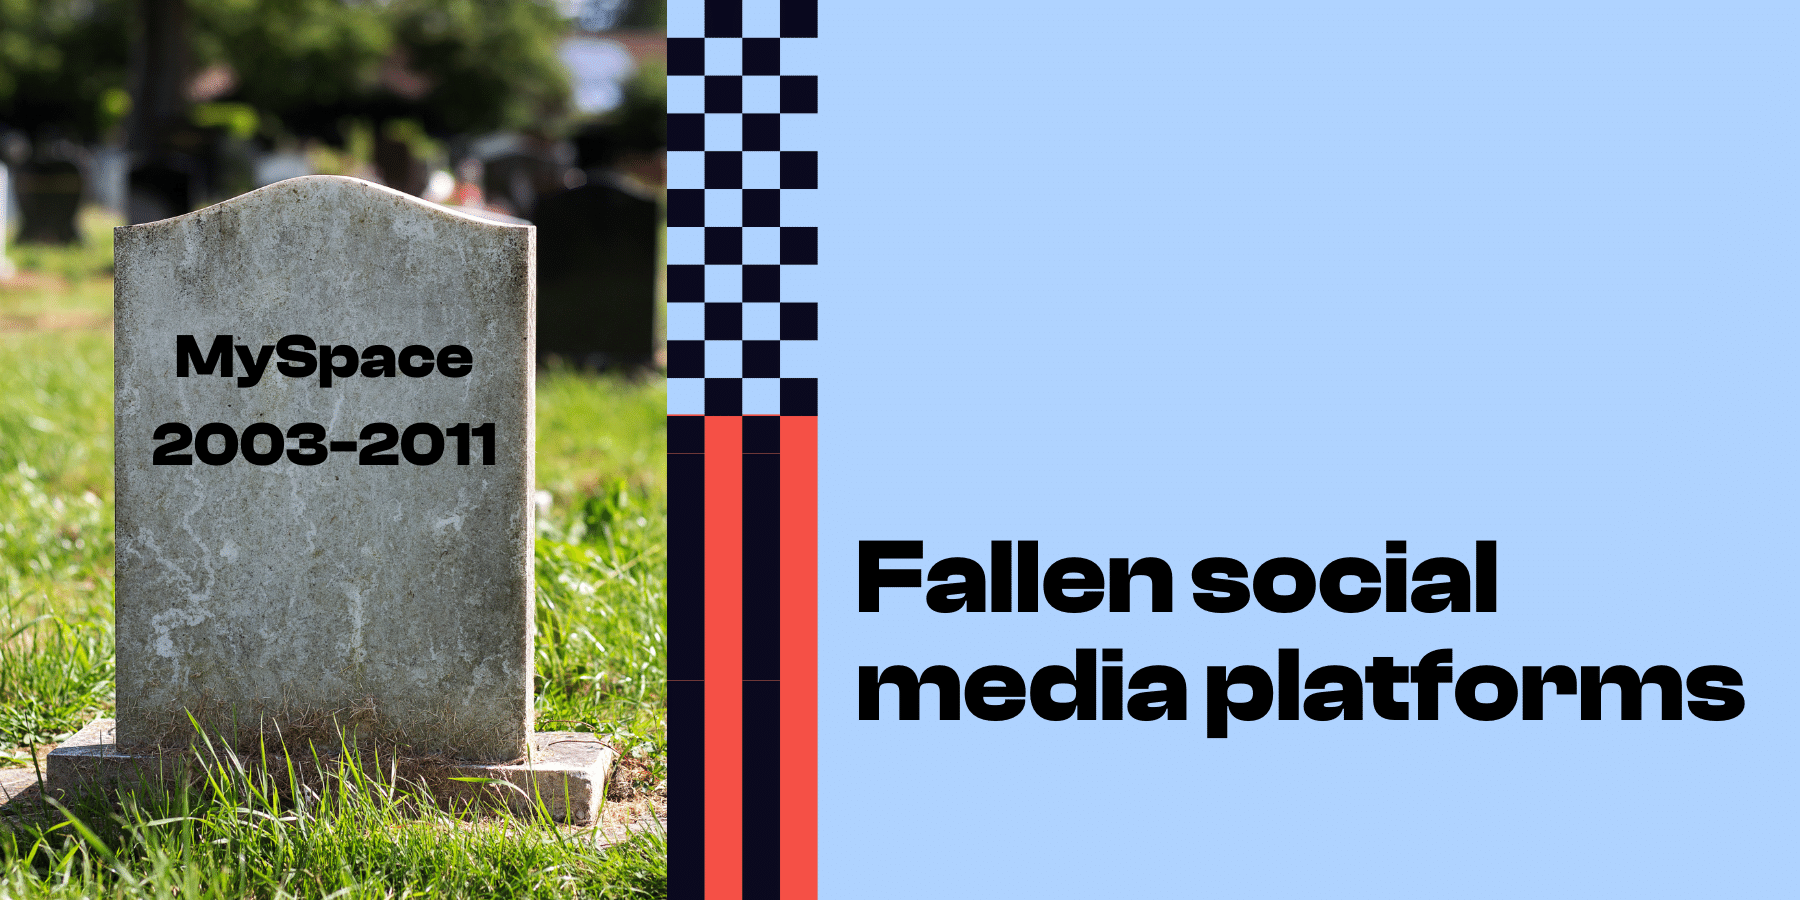 Fallen social media platforms from the past decade 